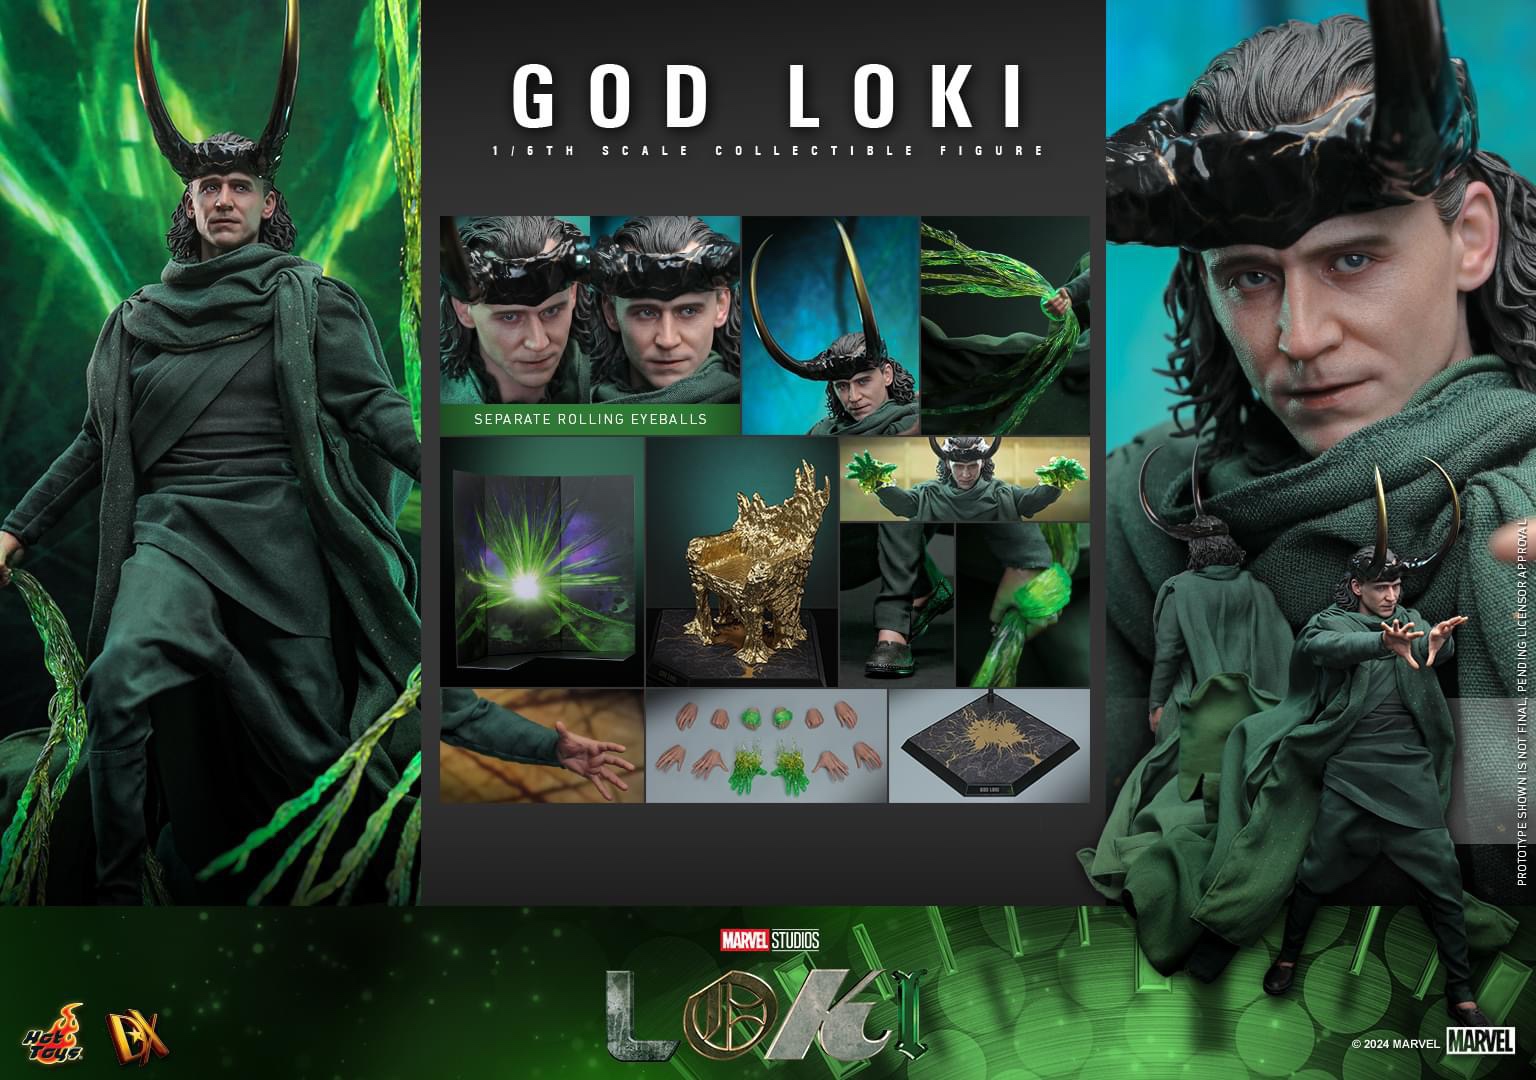 HOT TOYS Loki - 1/6th scale God Loki Collectible Figure